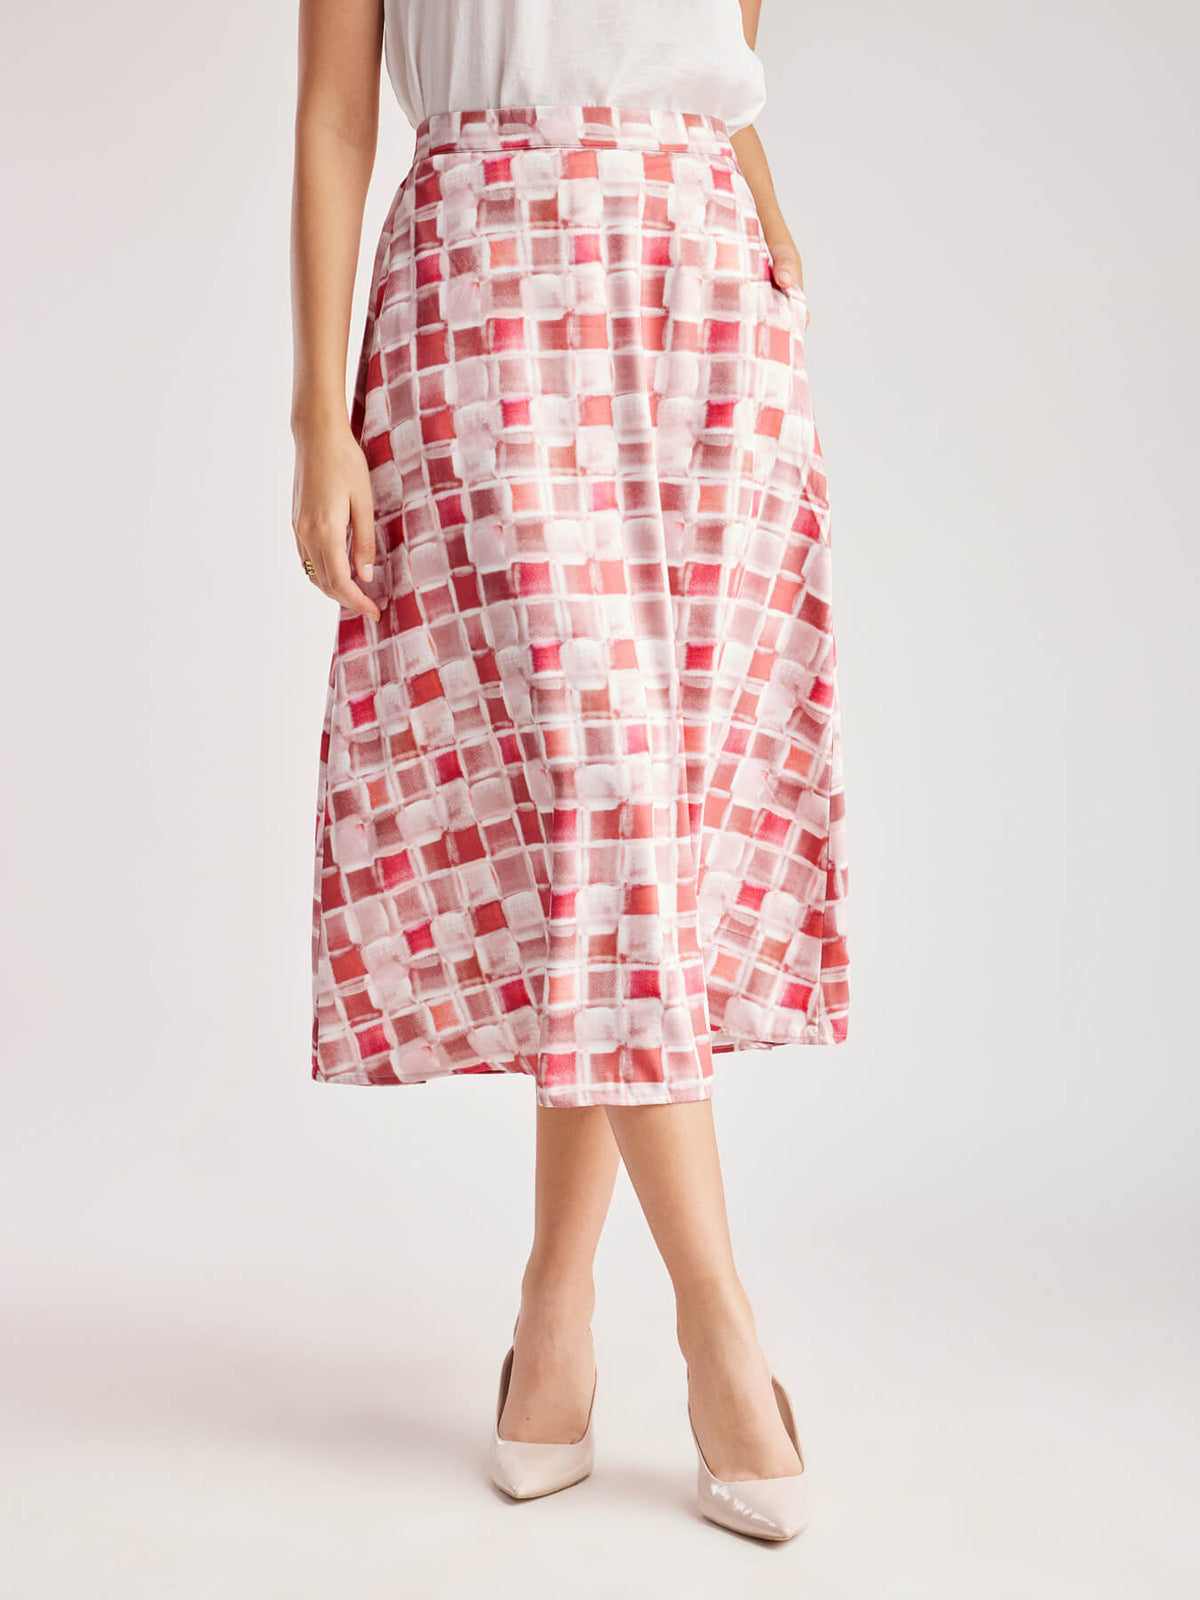 Geometric Print A-Line Skirt - Pink